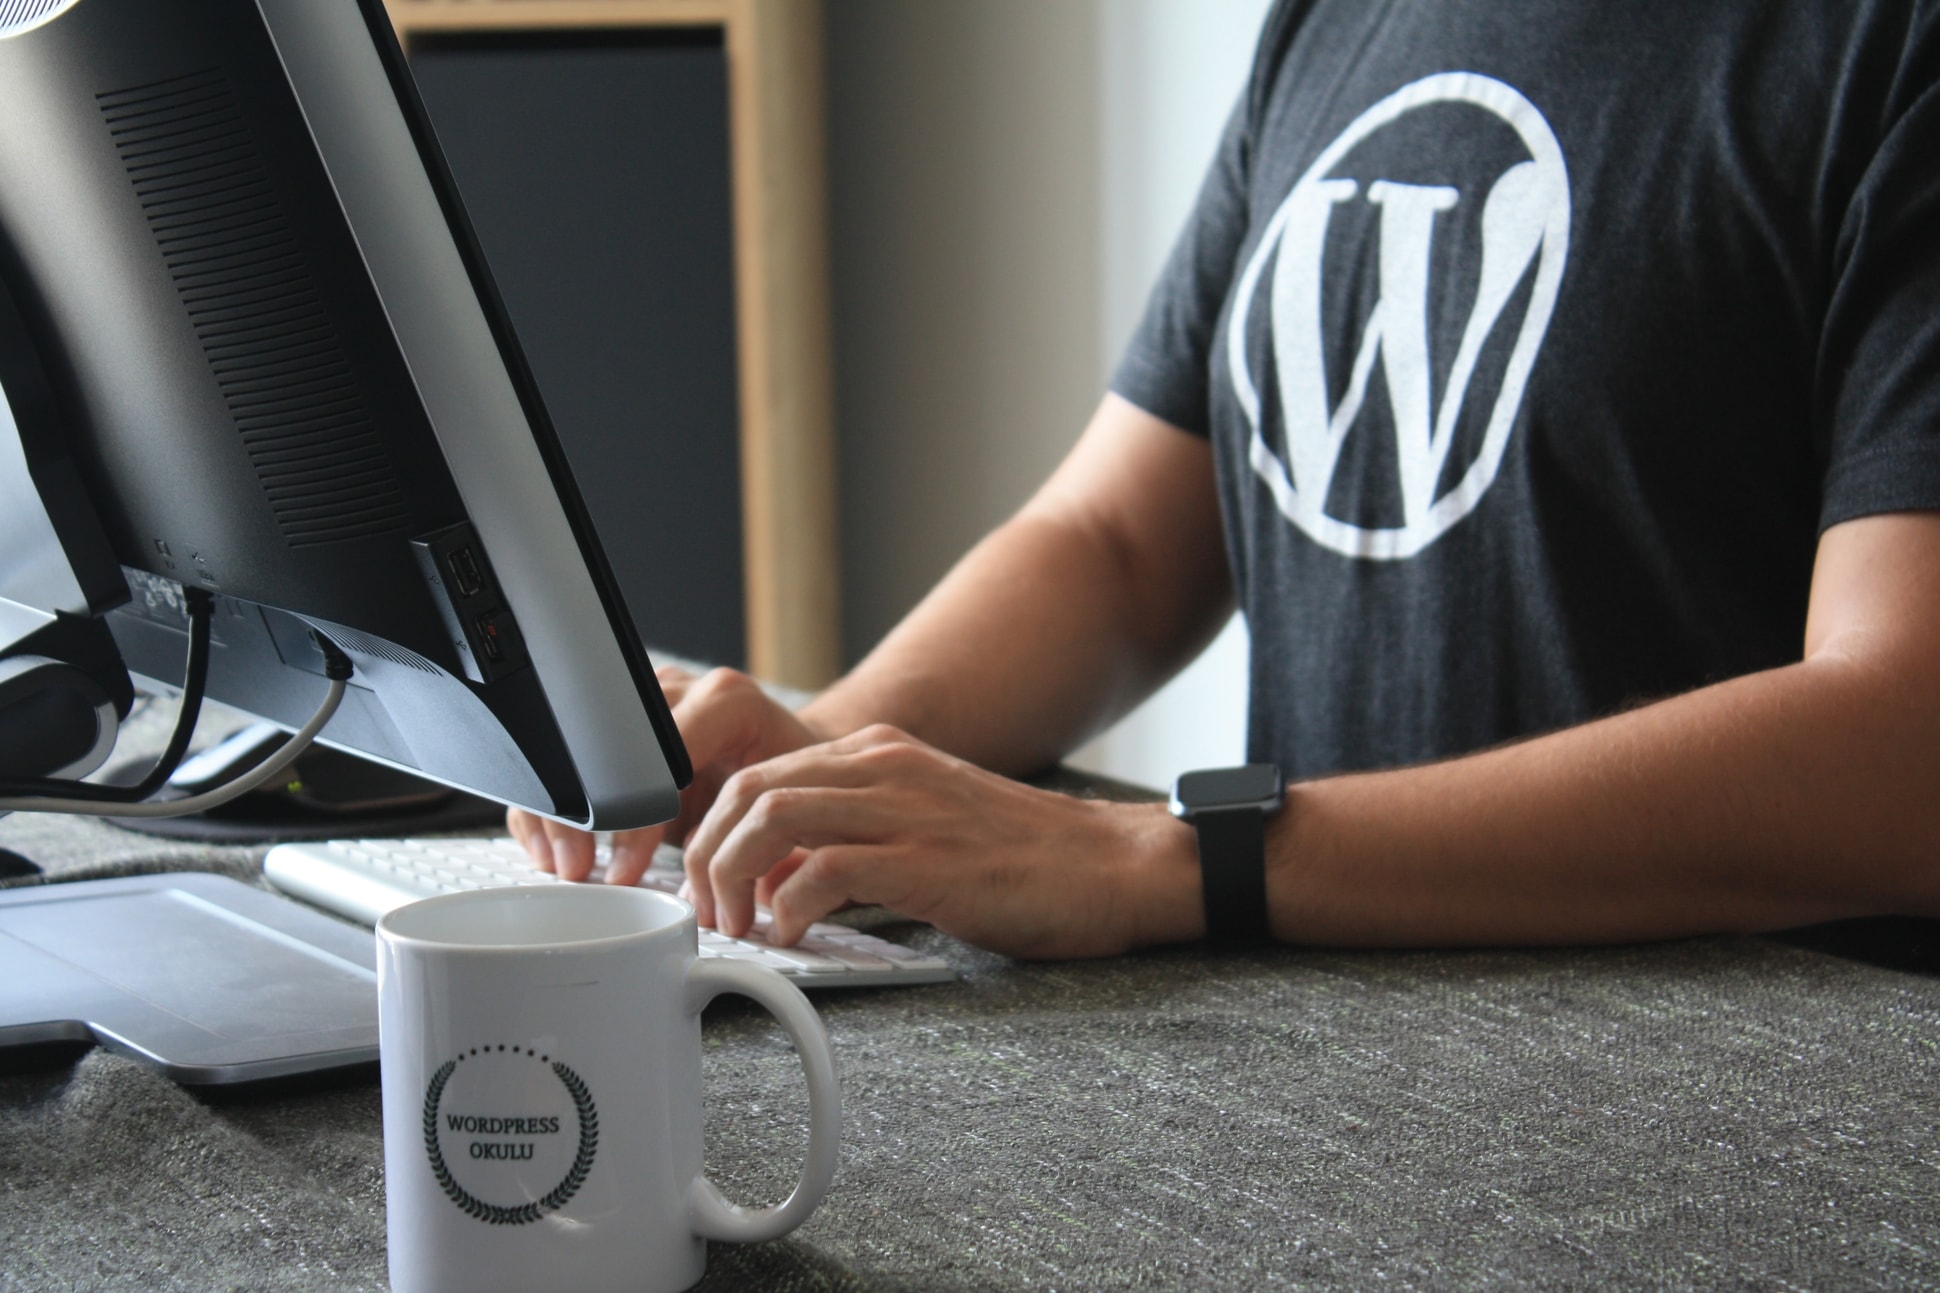 WordPress Website Design Guide: Things To Know Before Creating Wordpress Websites